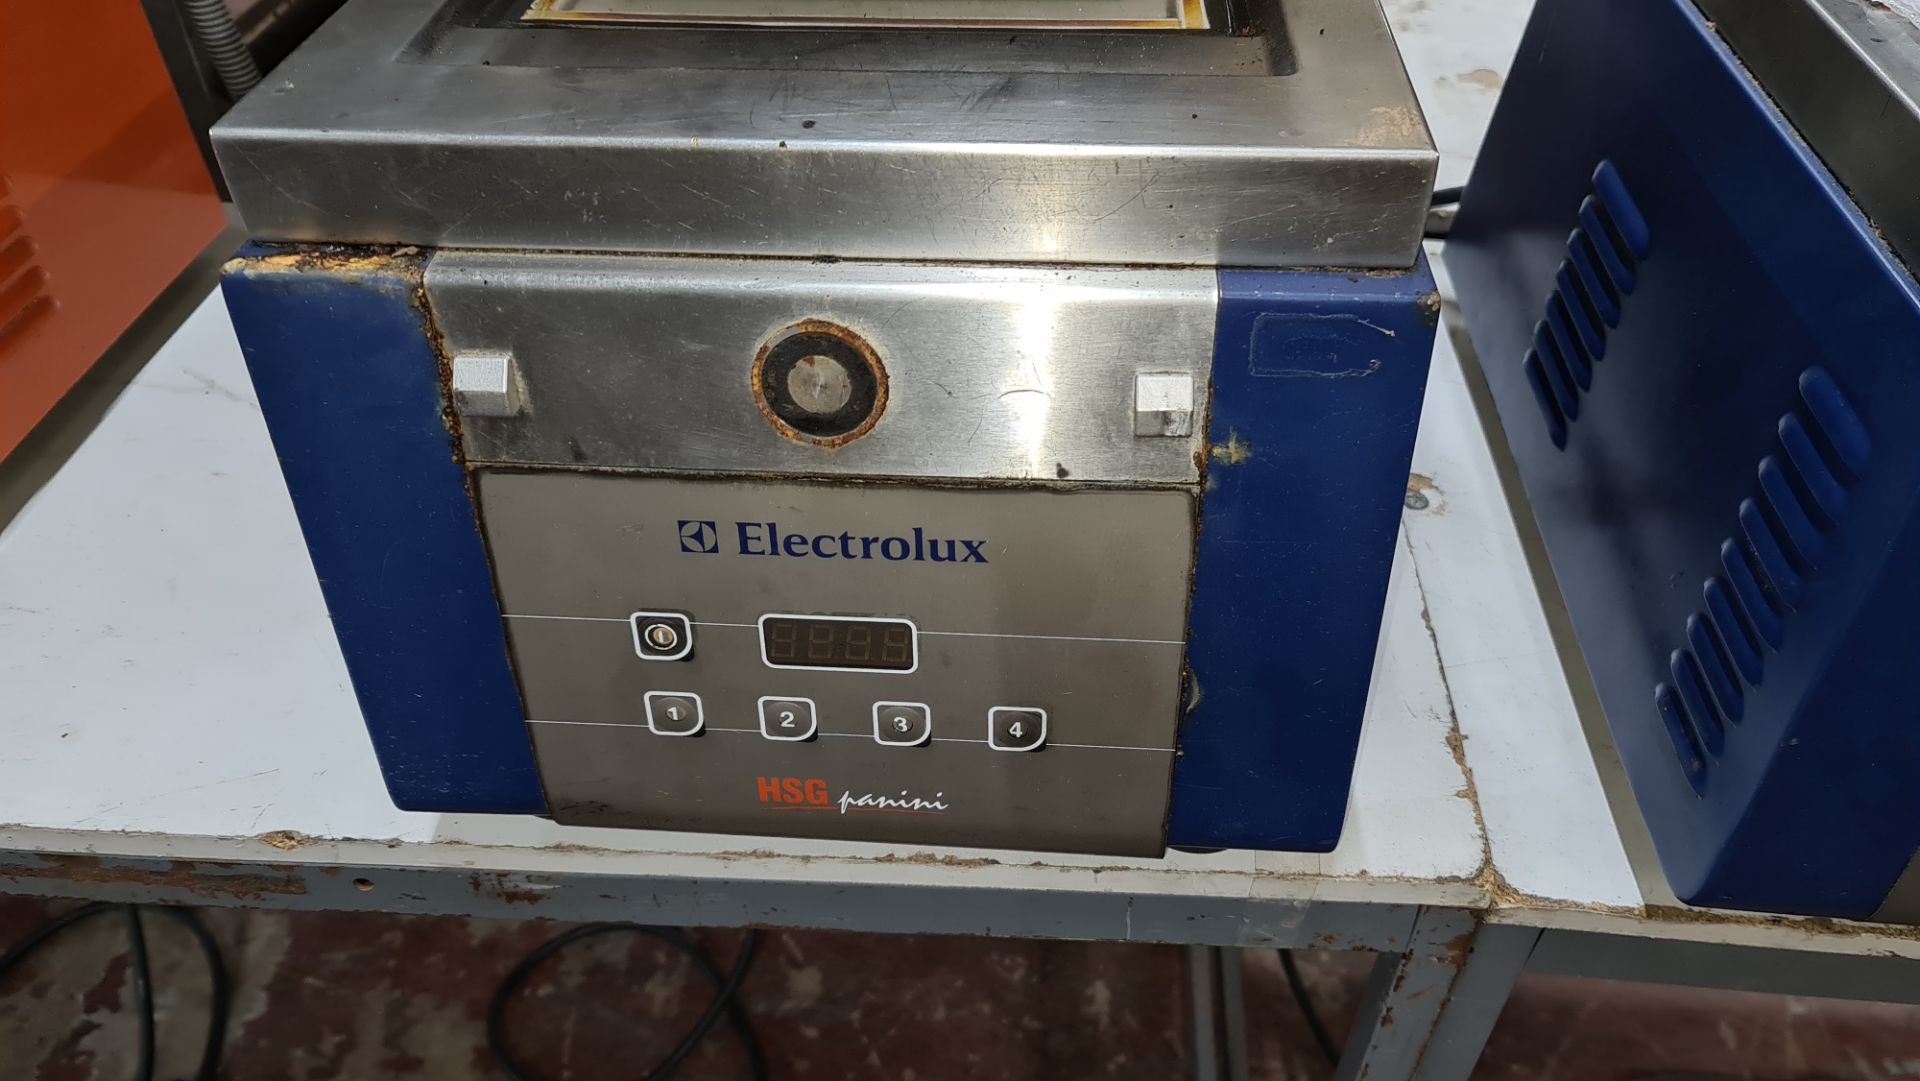 Electrolux HSG panini machine model HSPP - Image 4 of 5